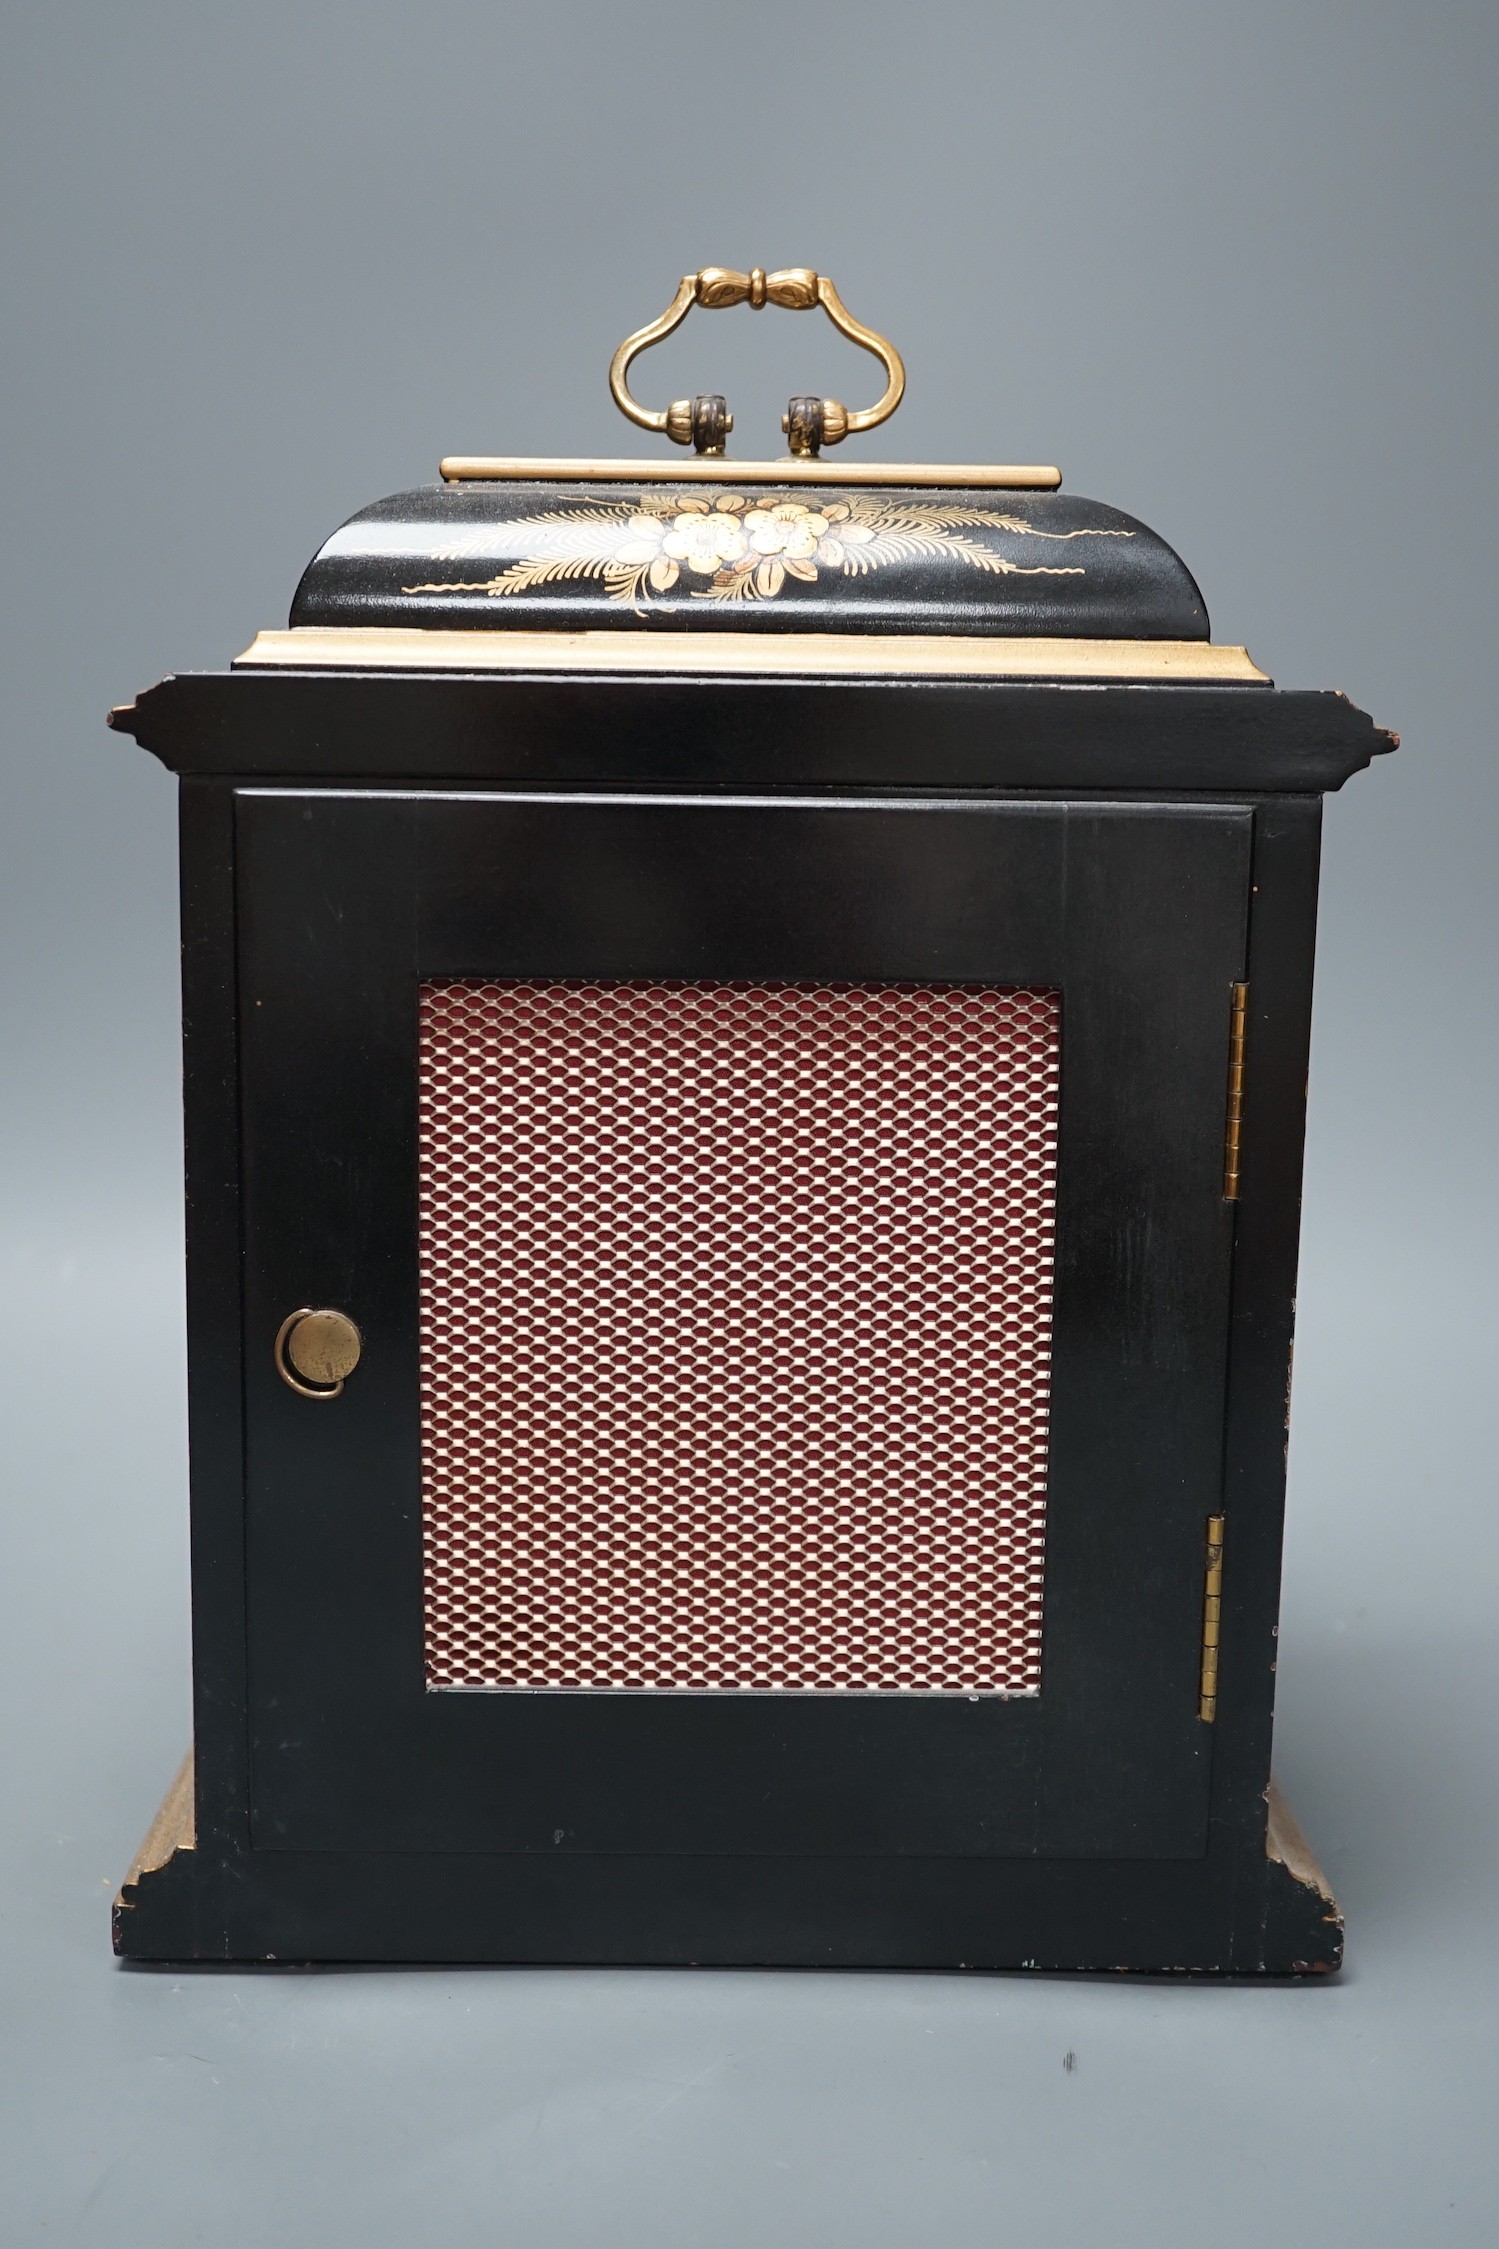 A F.W. Elliott japanned mantel clock, with chiming mechanism, 32 cms high